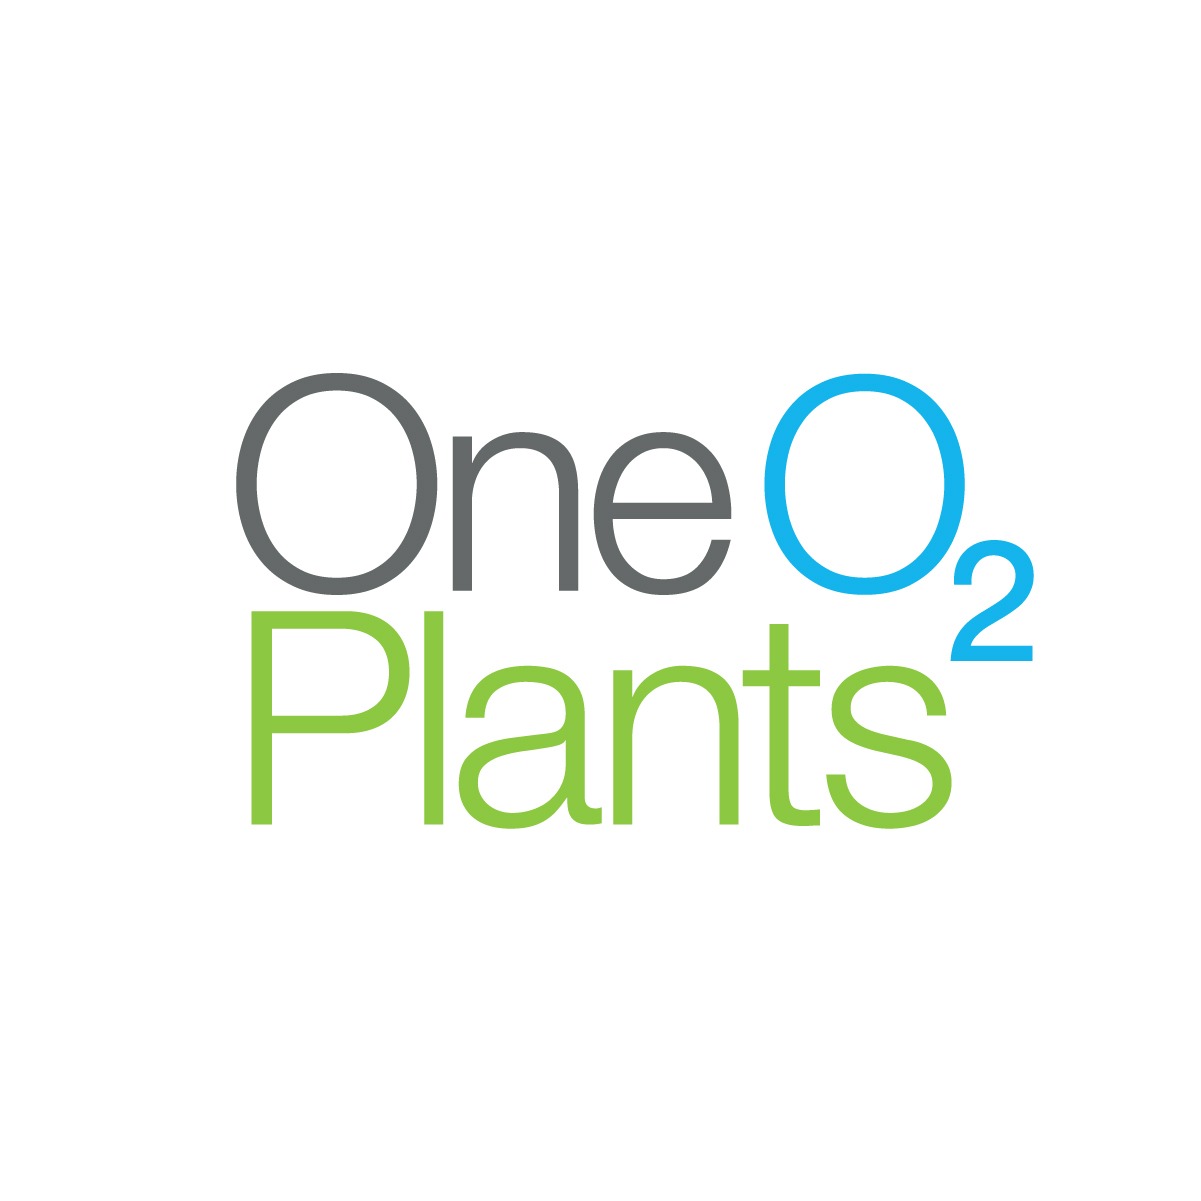 Oneo2plants Pte. Ltd. logo